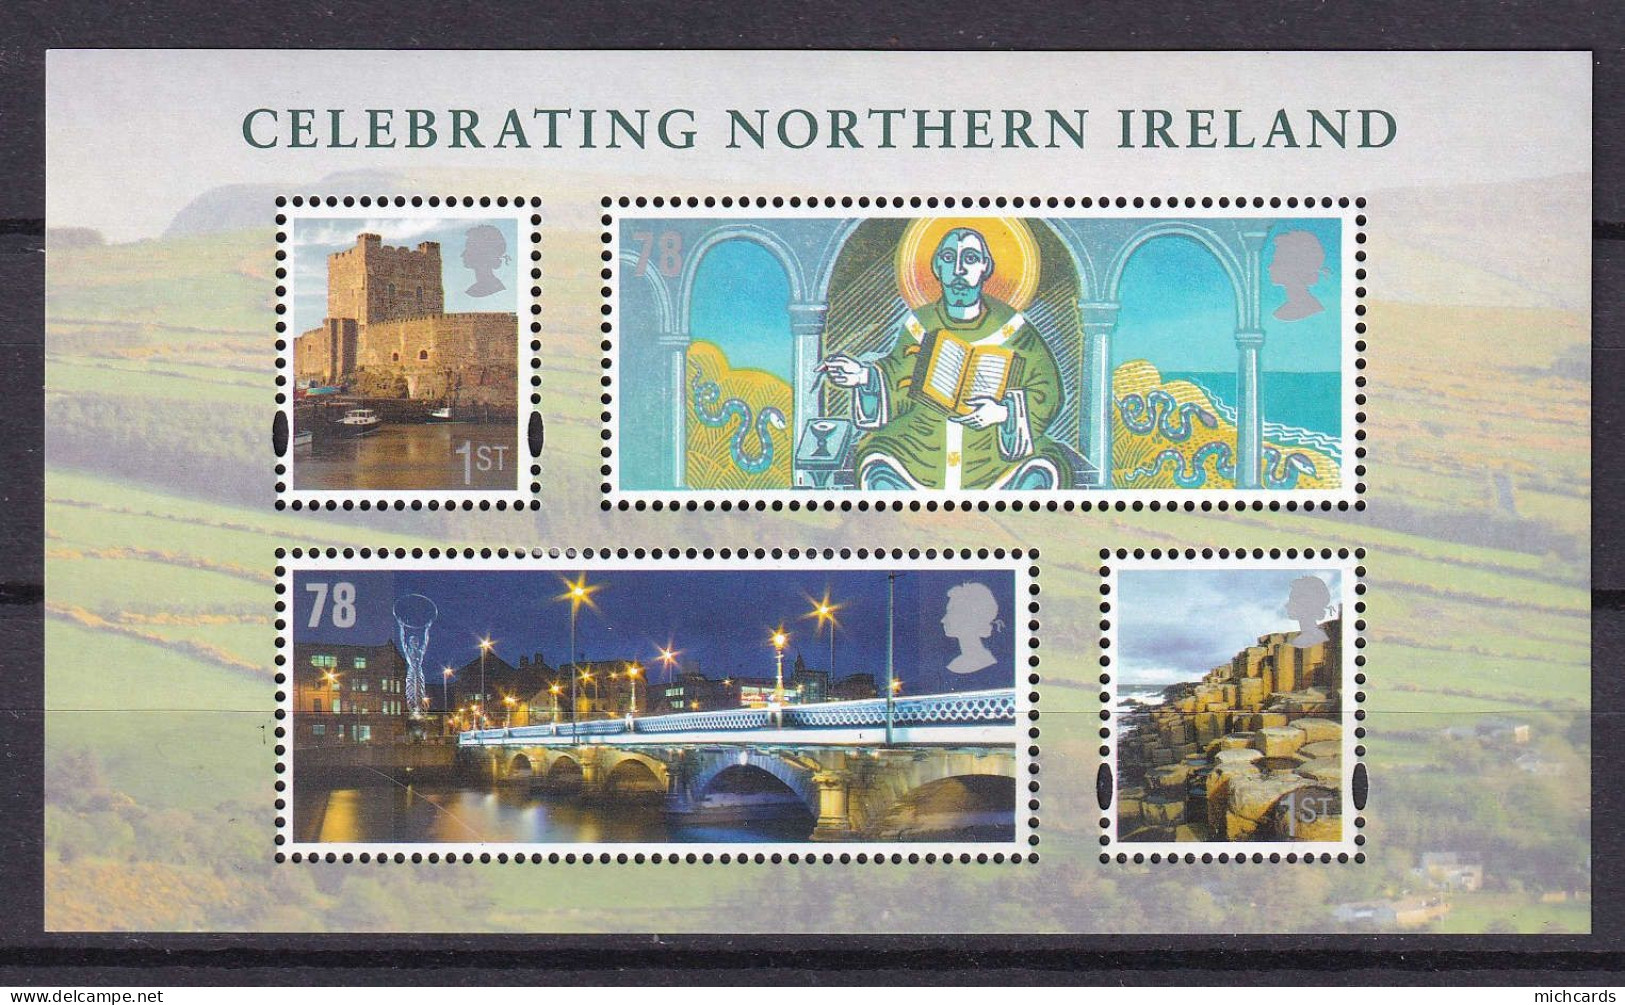 195 GRANDE BRETAGNE 2008 - Y&T BF 55 - St Patrick Patron Irlande Chateau Pont - Neuf ** (MNH) Sans Charniere - Unused Stamps